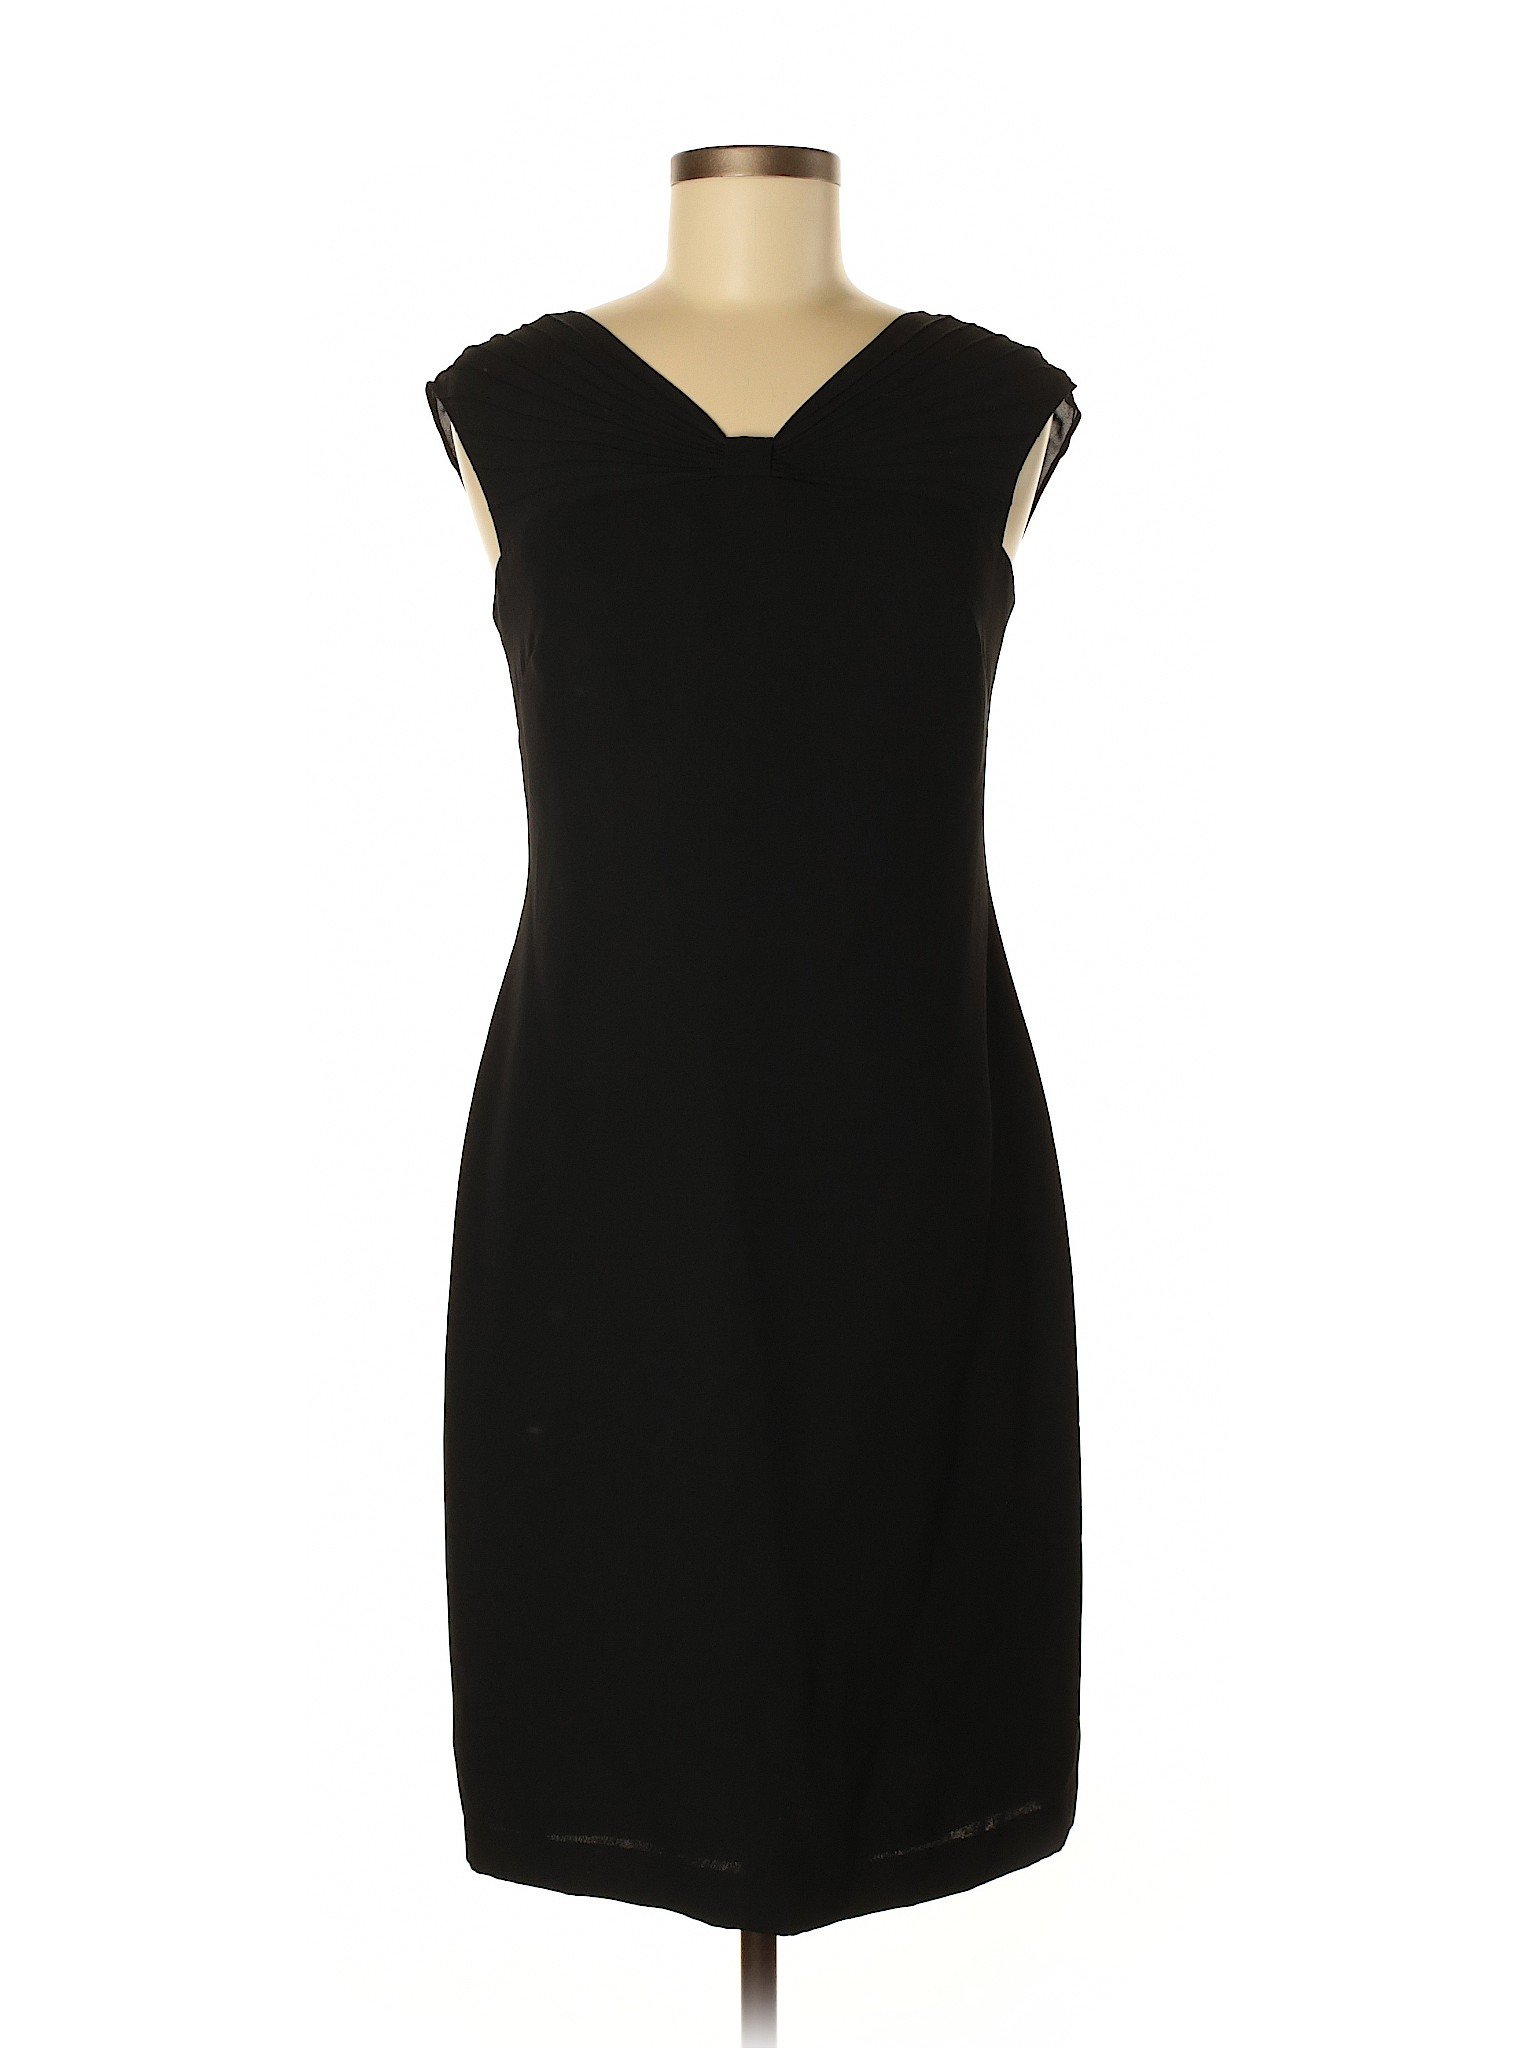 Jones New York Women Black Cocktail Dress 6 | eBay